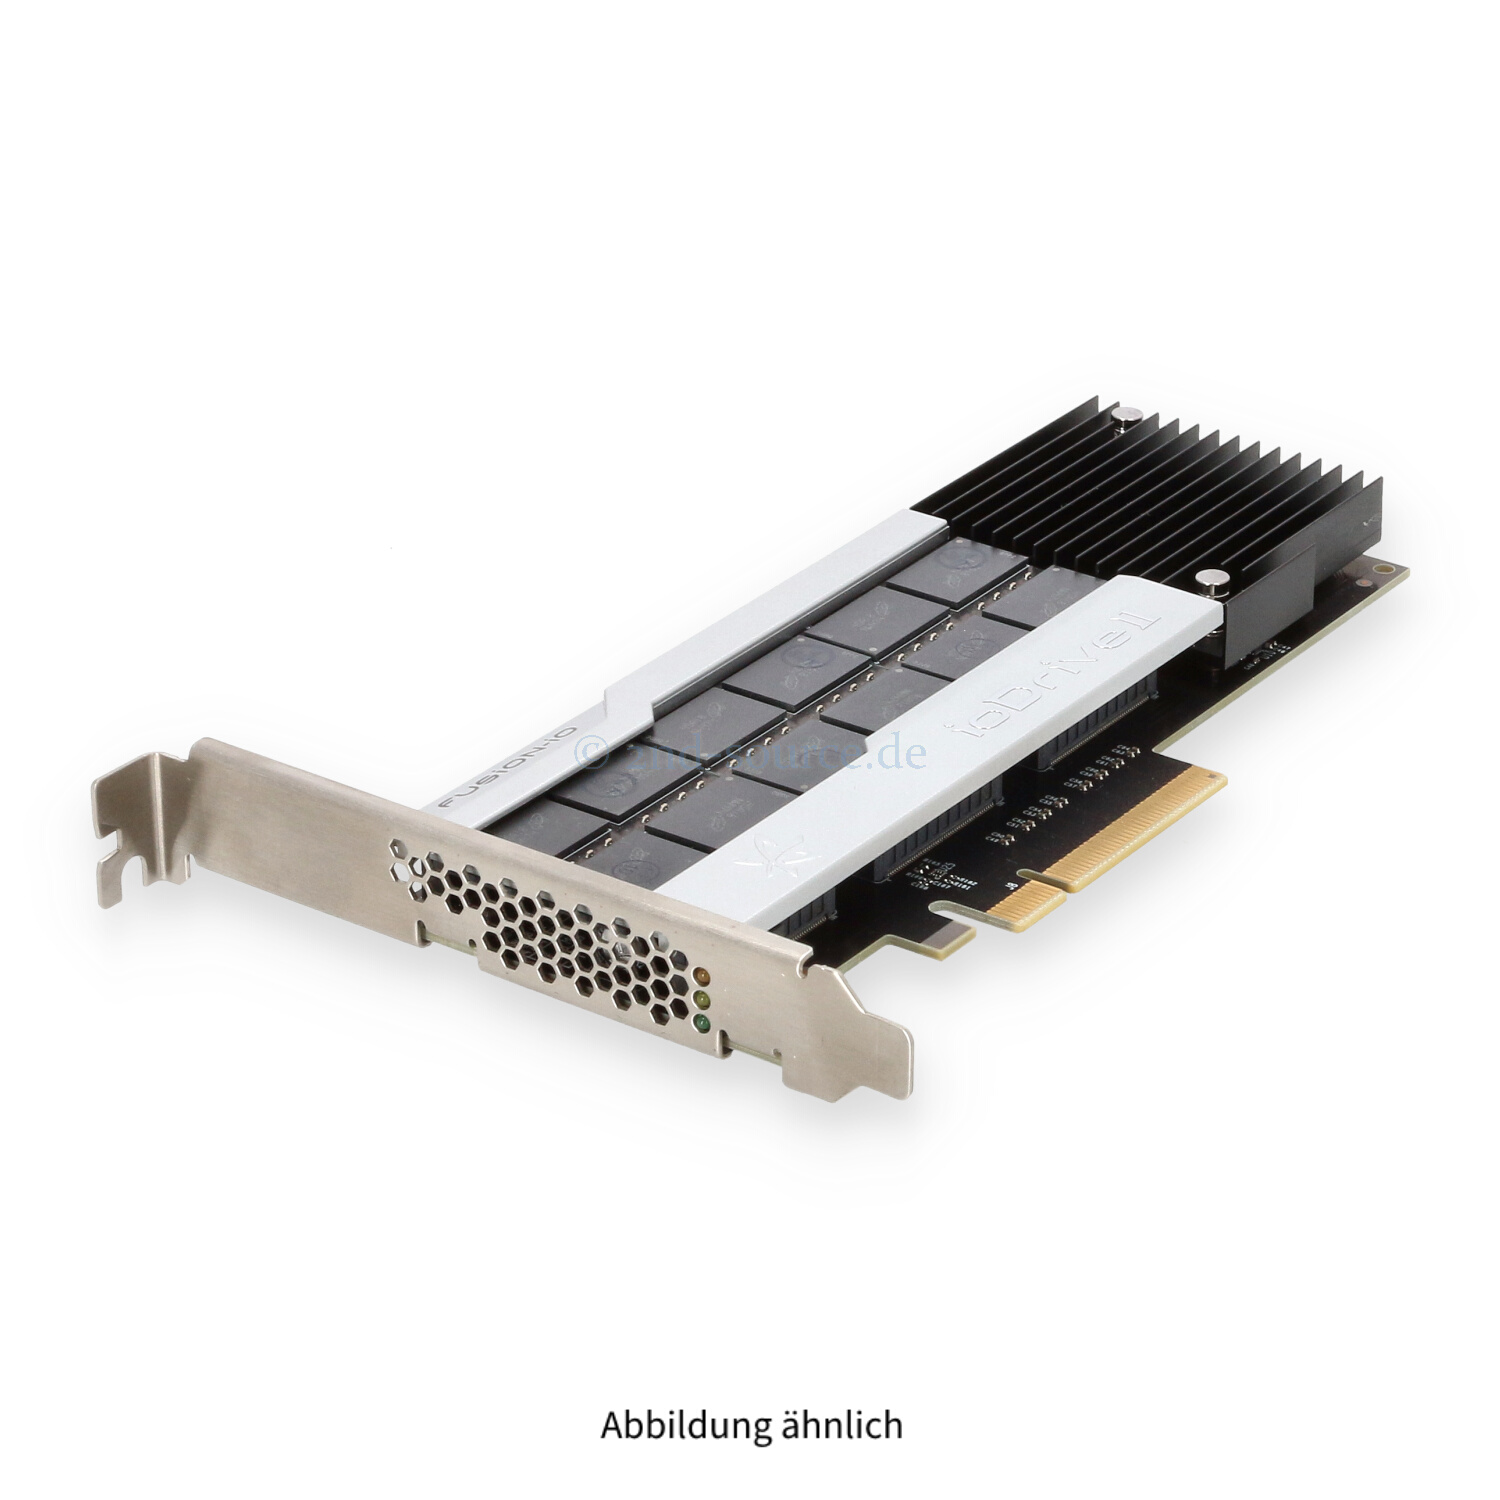 Fusion-io ioDrive II 1.92TB PCIe x8 SSD High Profile J00-001-1T20-CS-0001 MA004083-001_15